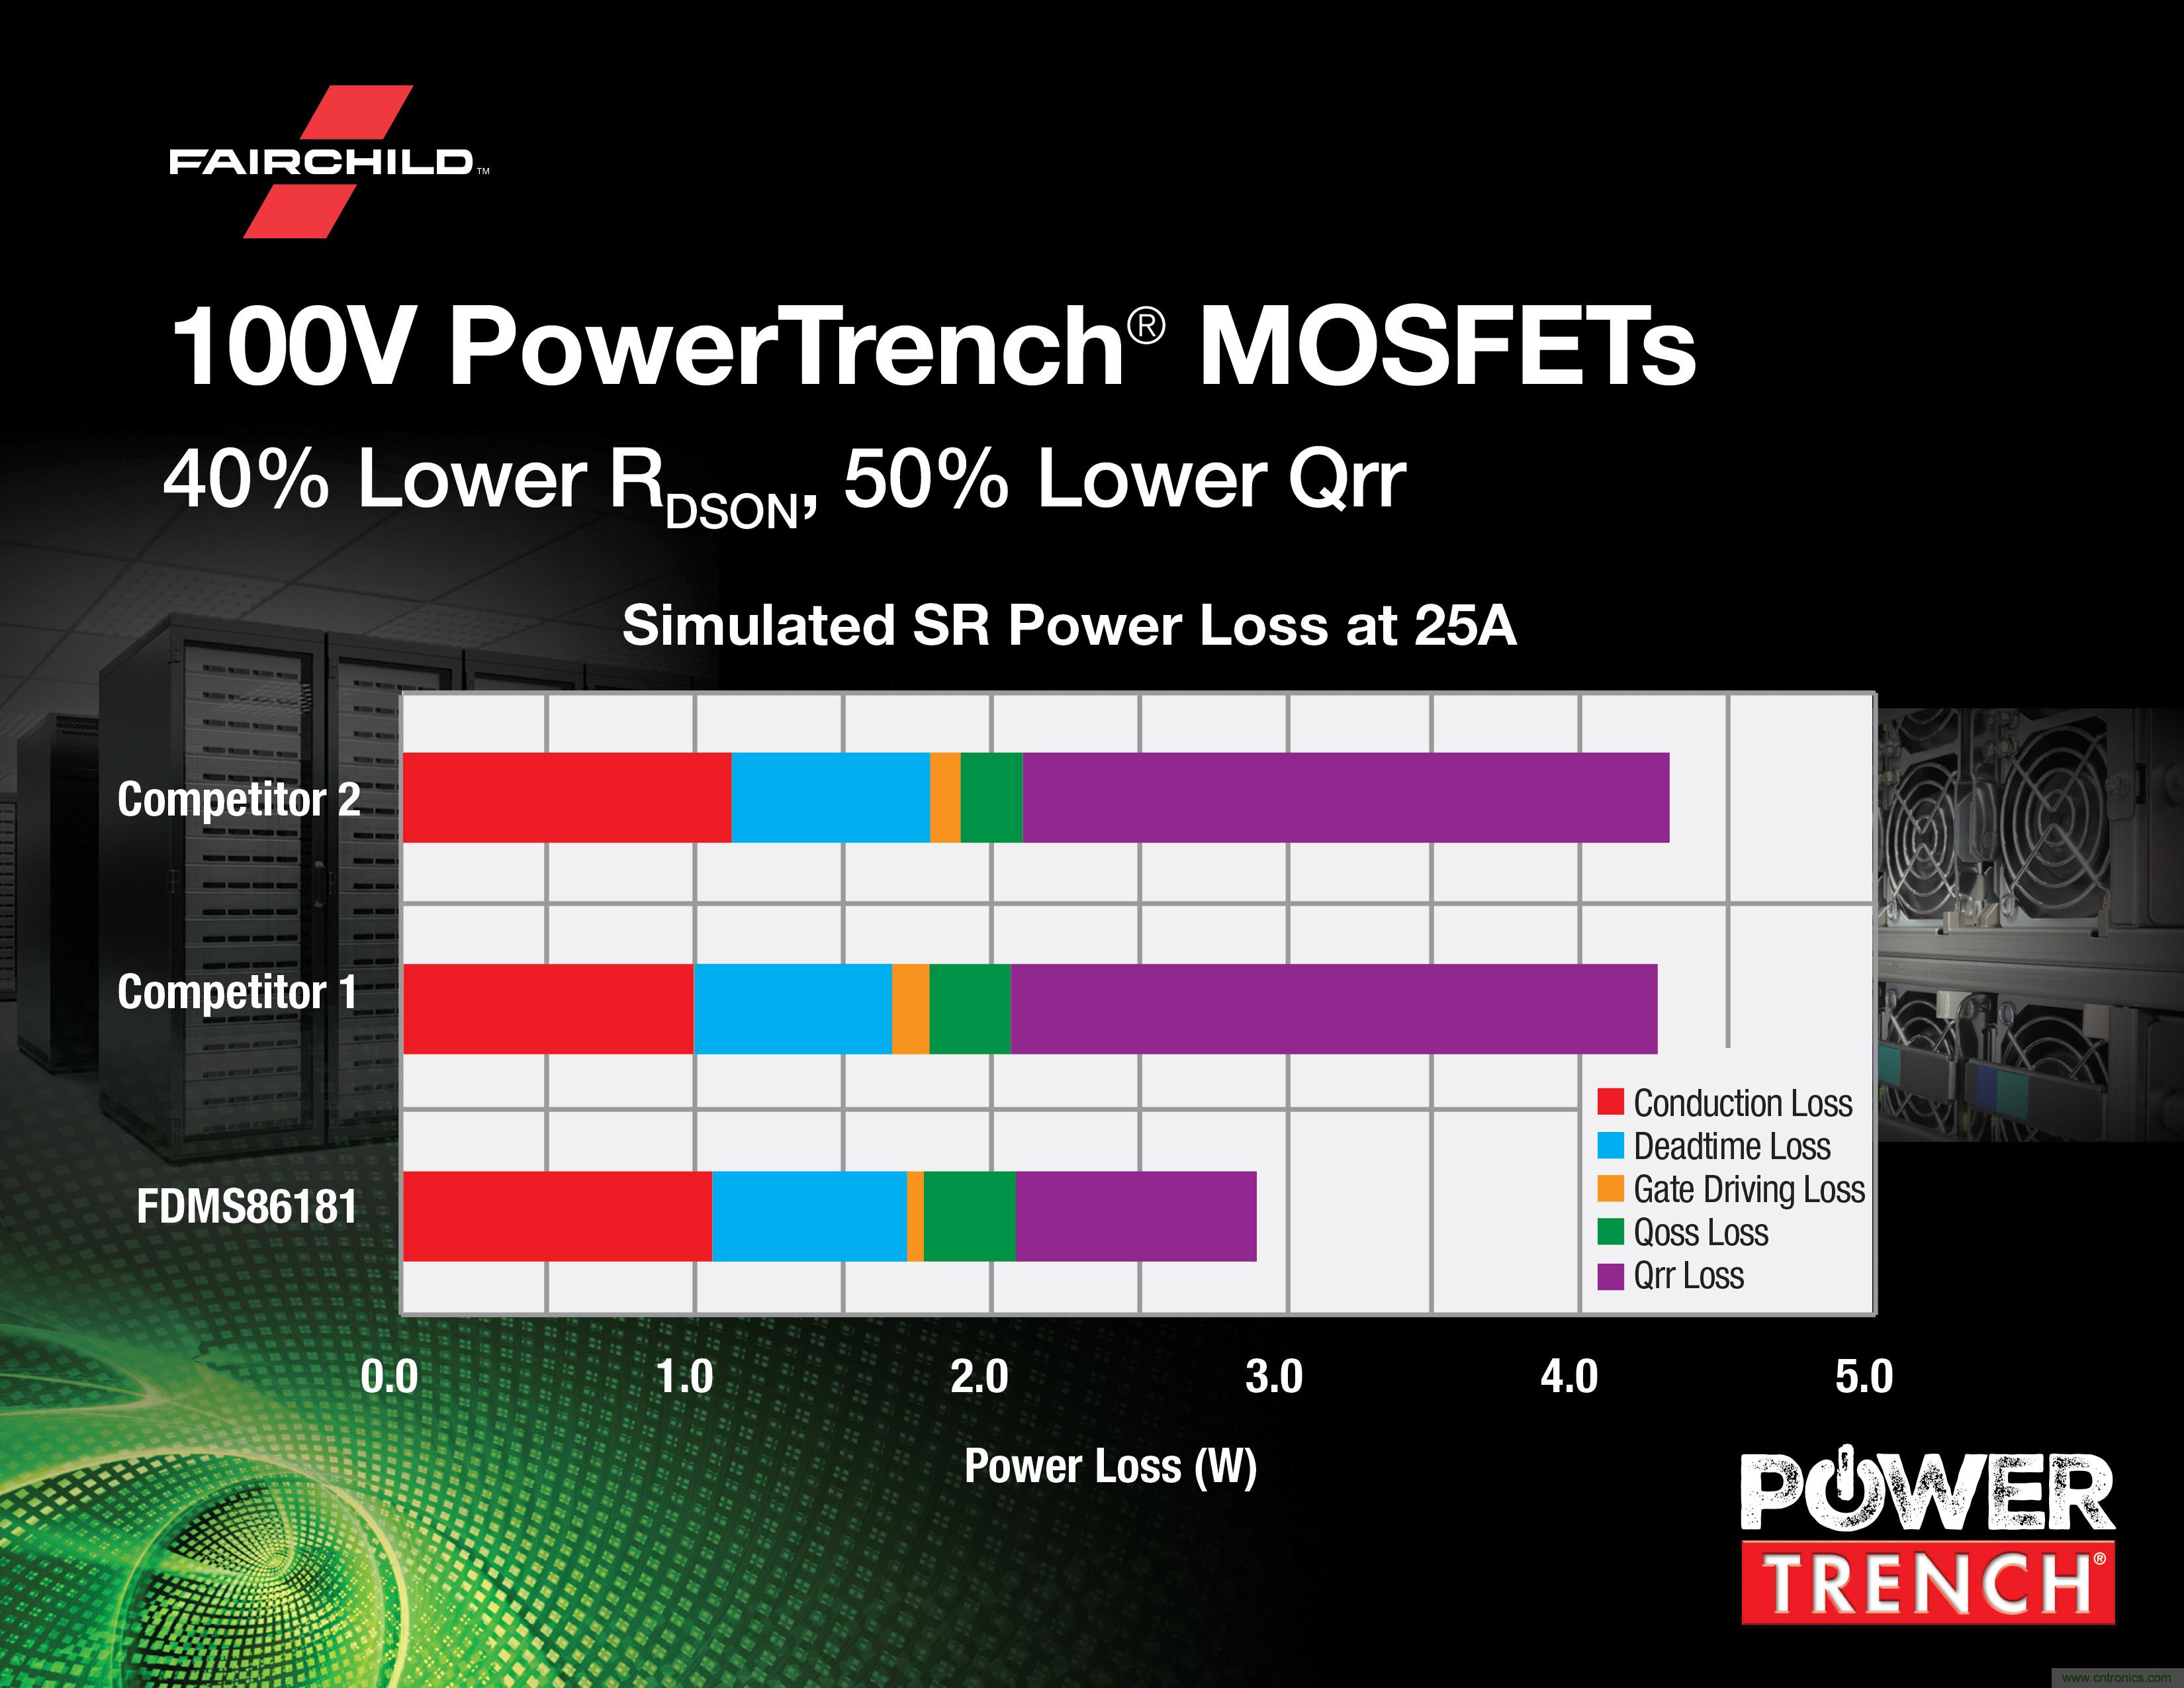 Fairchild新一代PowerTrench MOSFET提供一流性能